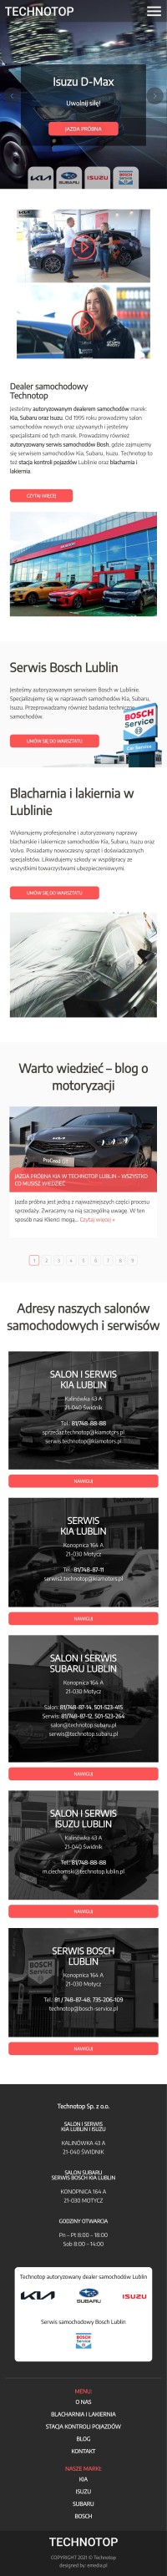 Strona internetowa technotop.pl - zrzut mobile